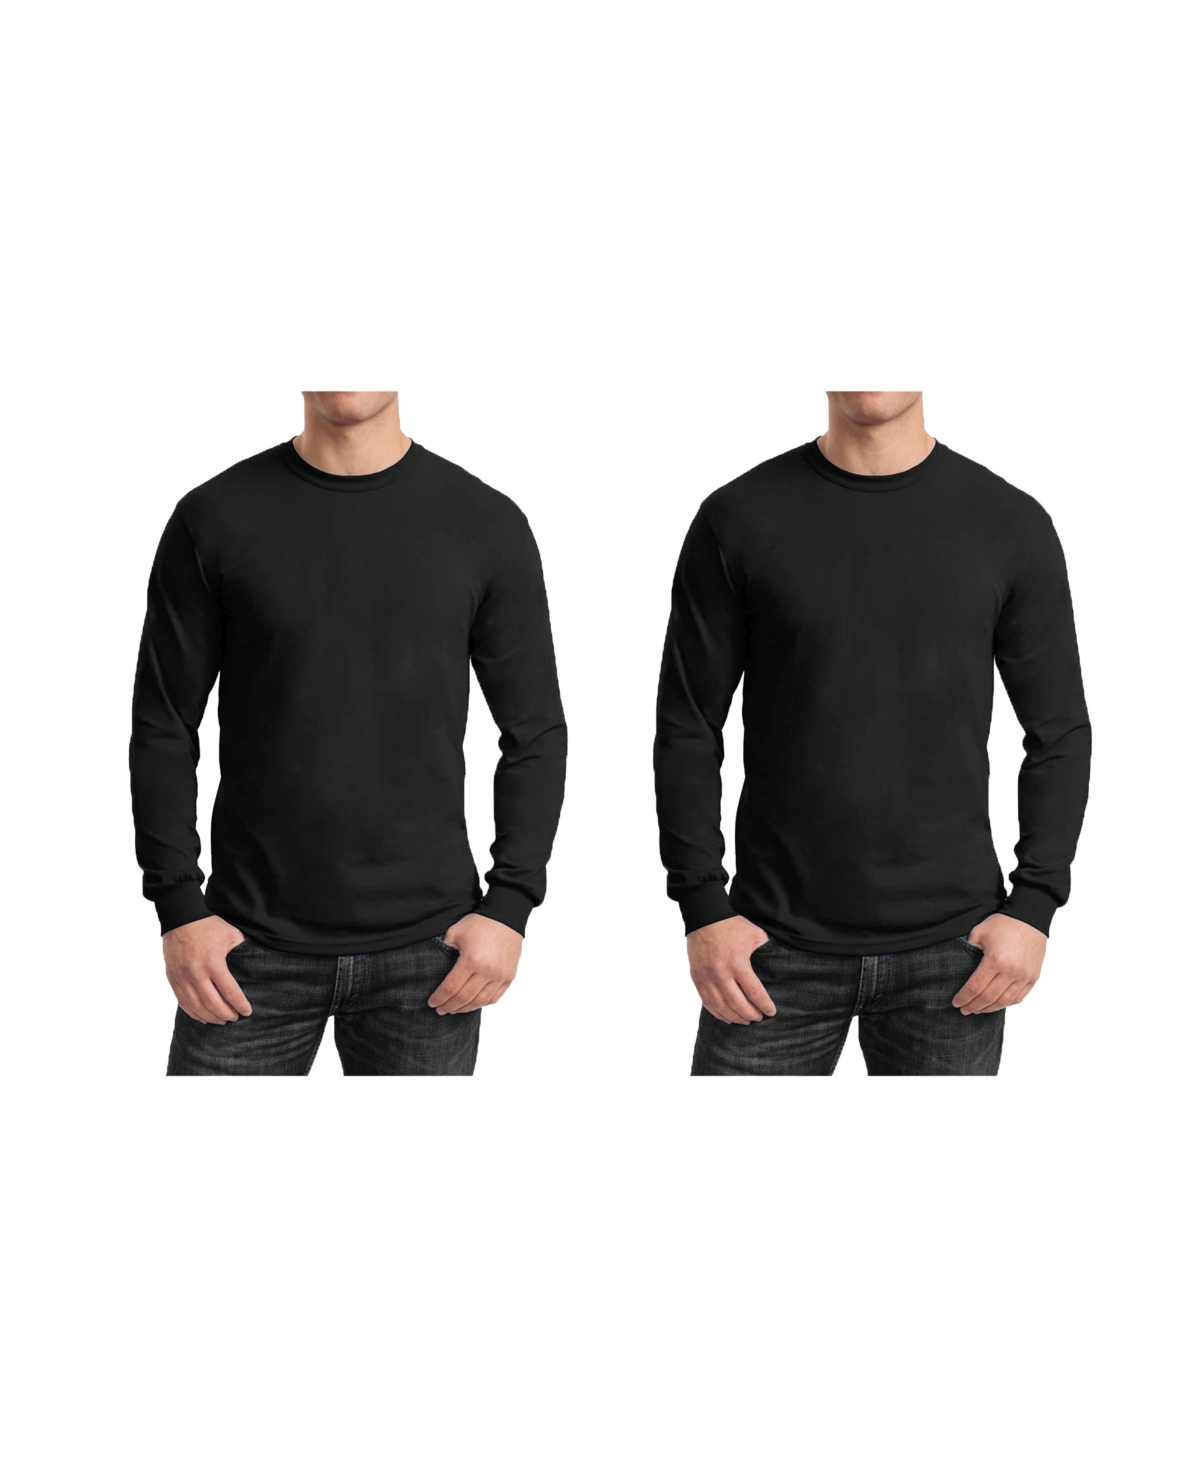 Men's 2-Pack Egyptian Cotton-Blend Long Sleeve Crew Neck Tee - Black x